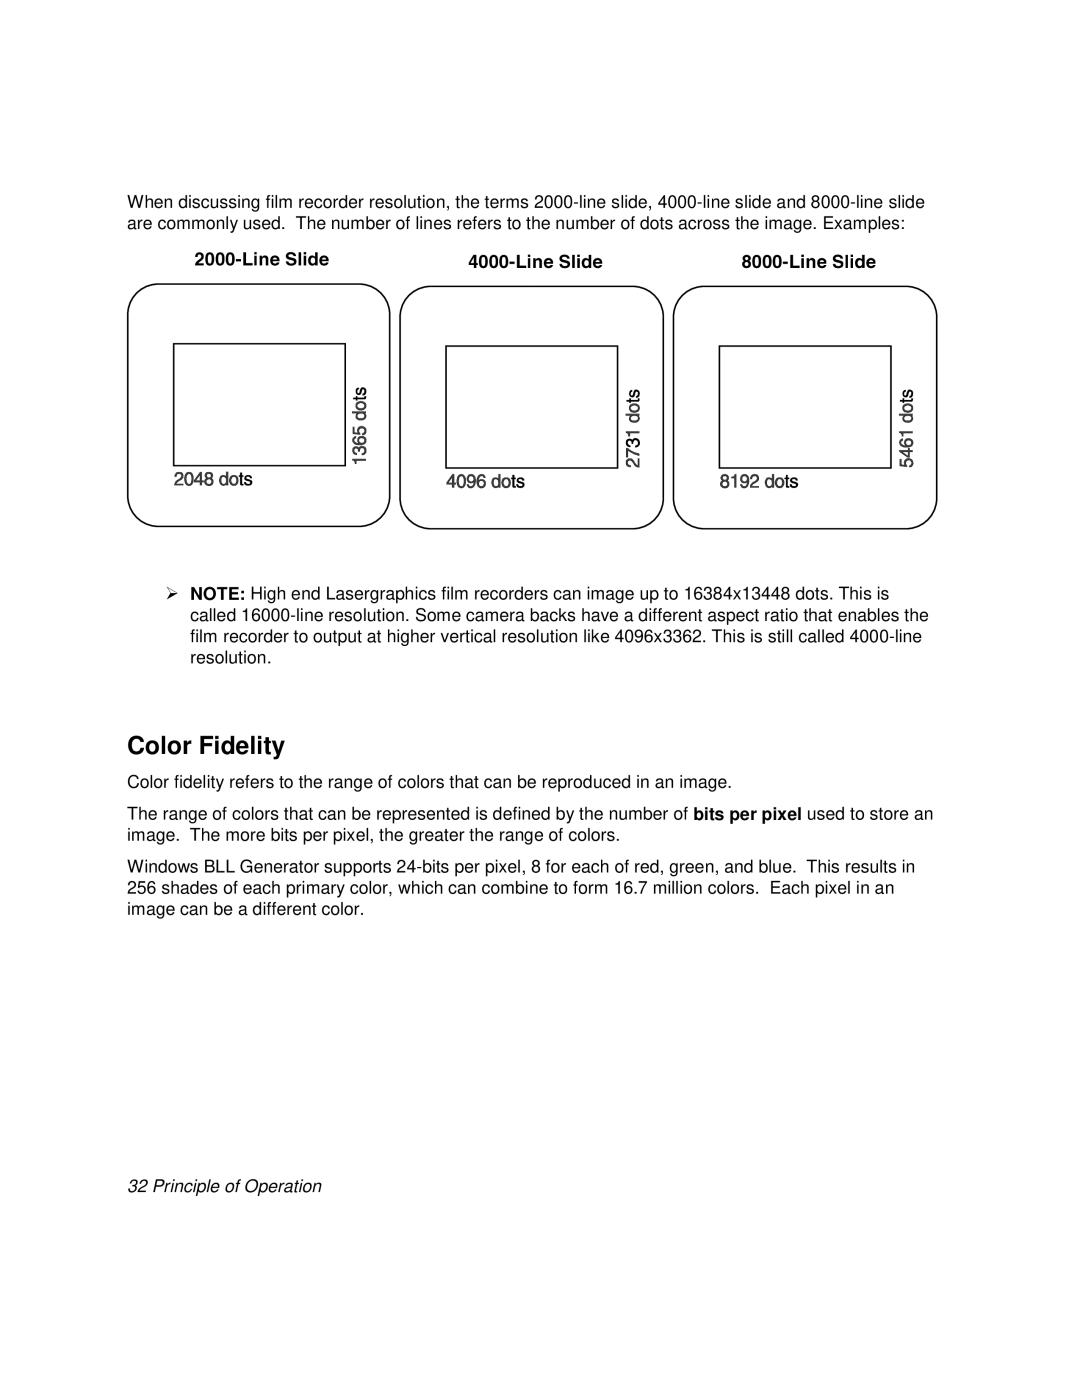 Polaroid BLL Generator manual Color Fidelity, Principle of Operation 